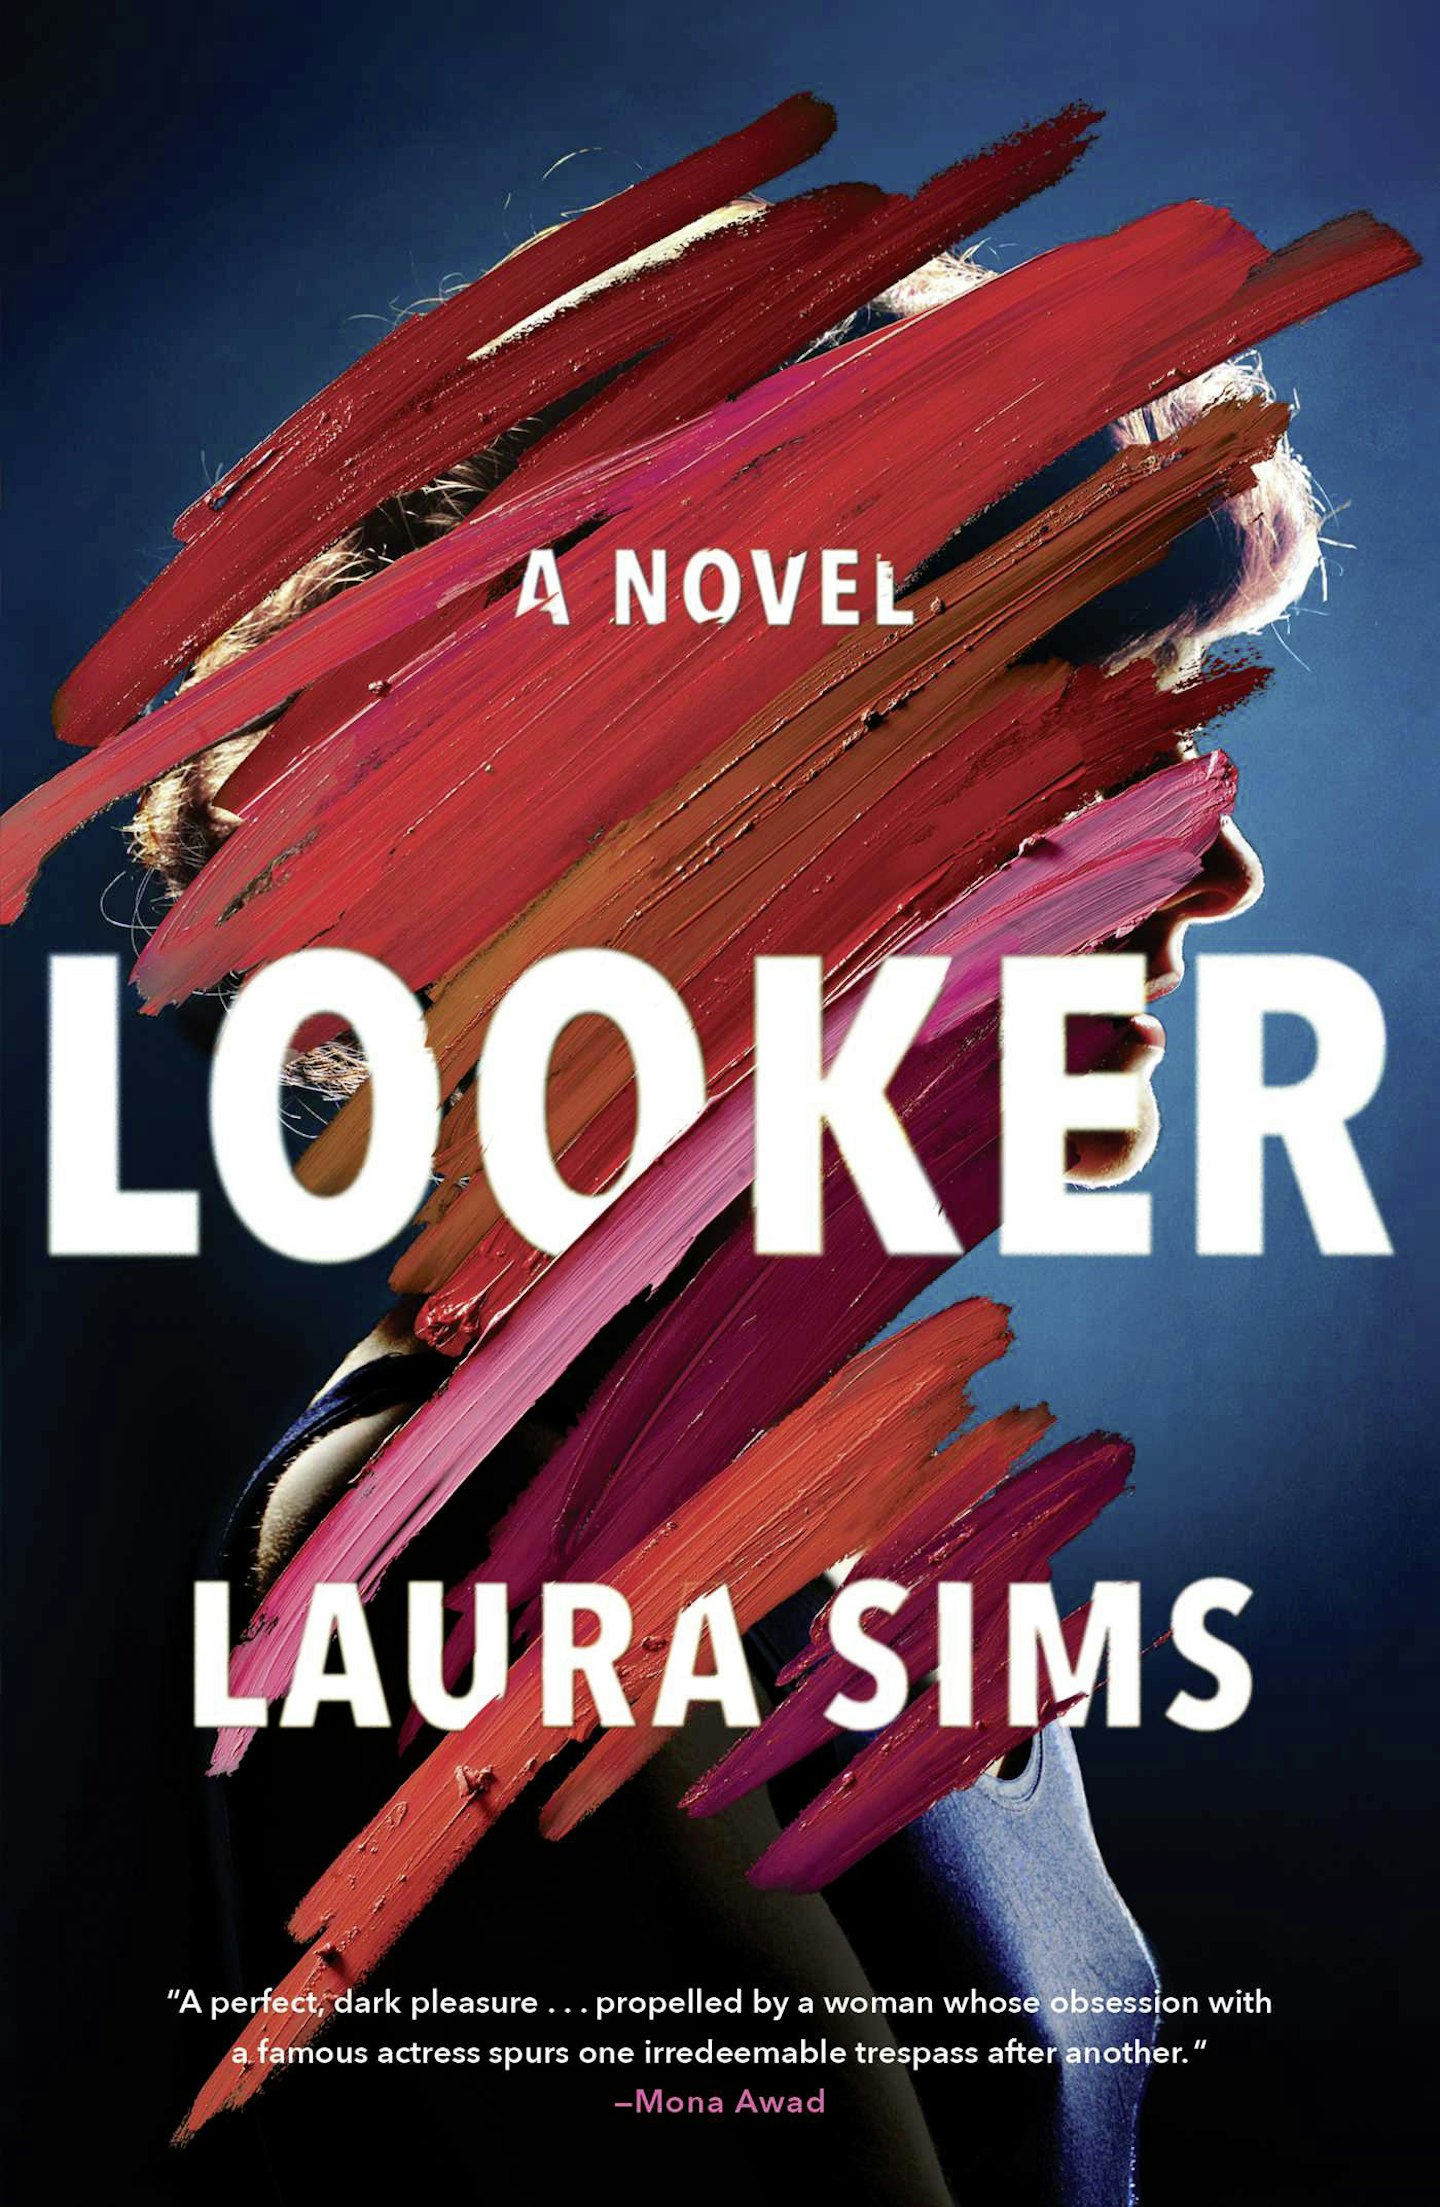 Looker - Laura Sims (Headline)